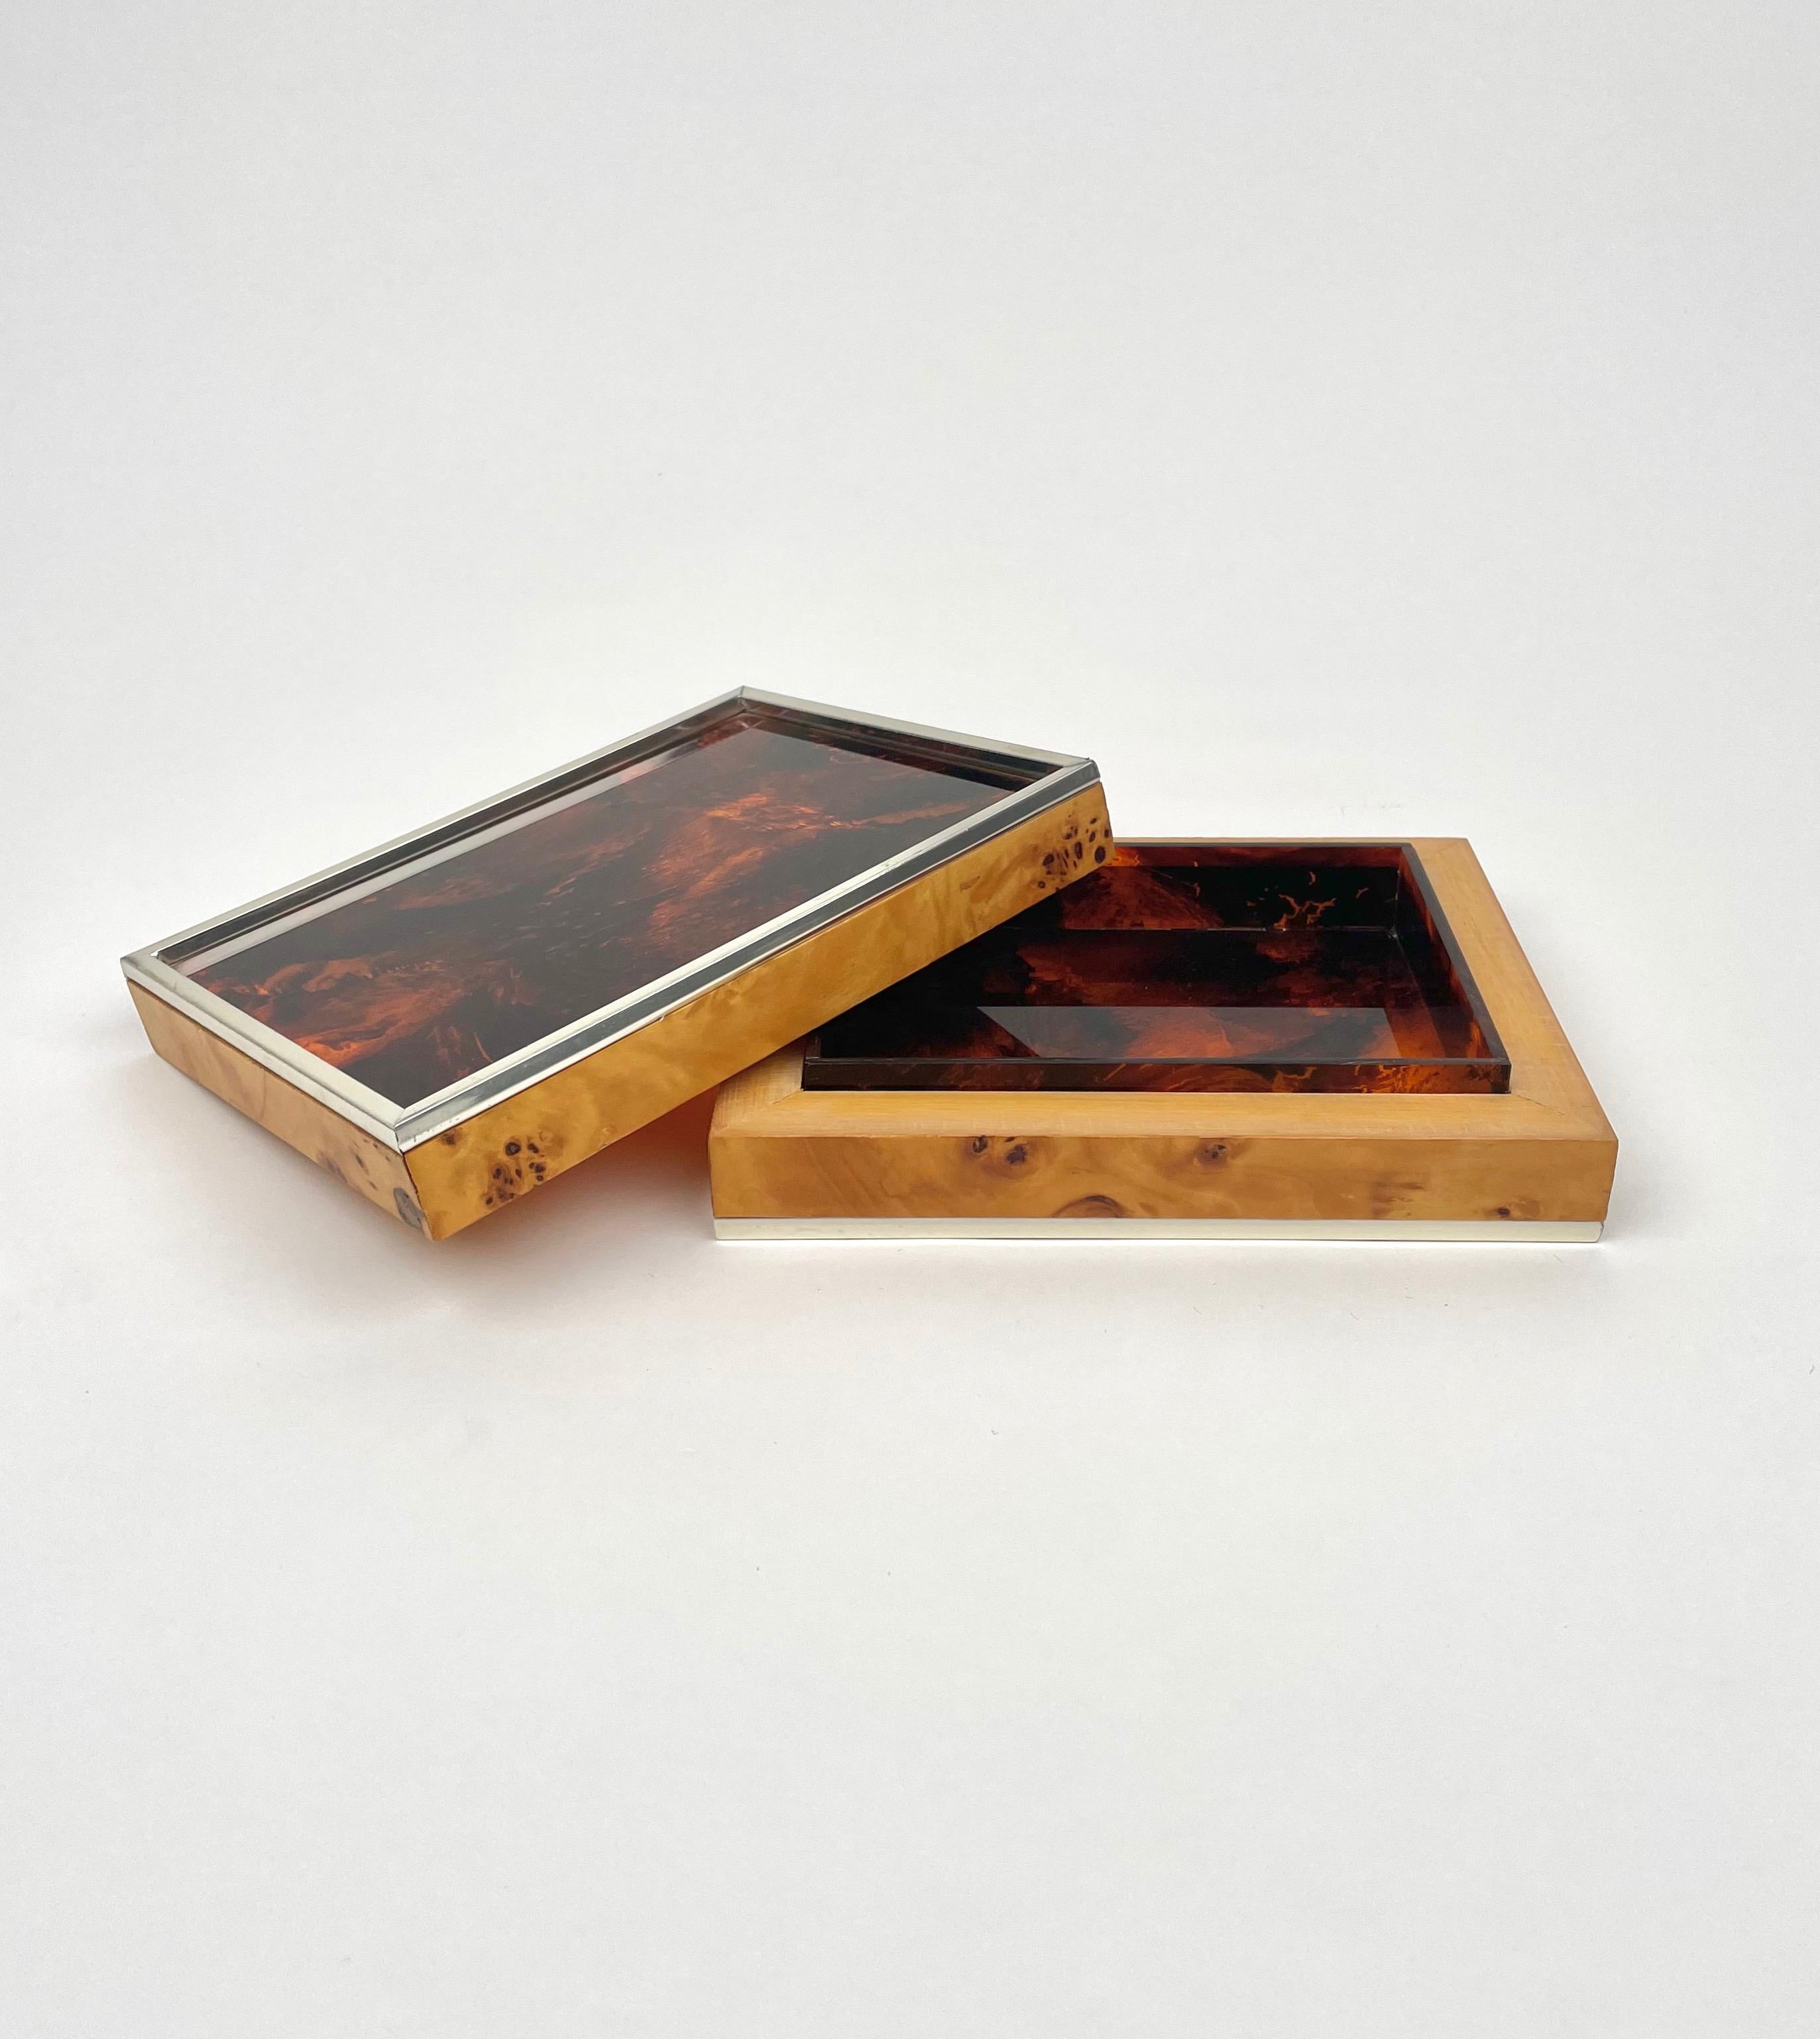 Burl Wood & Tortoiseshell Effect Lucite Box, Italy, 1970s For Sale 1